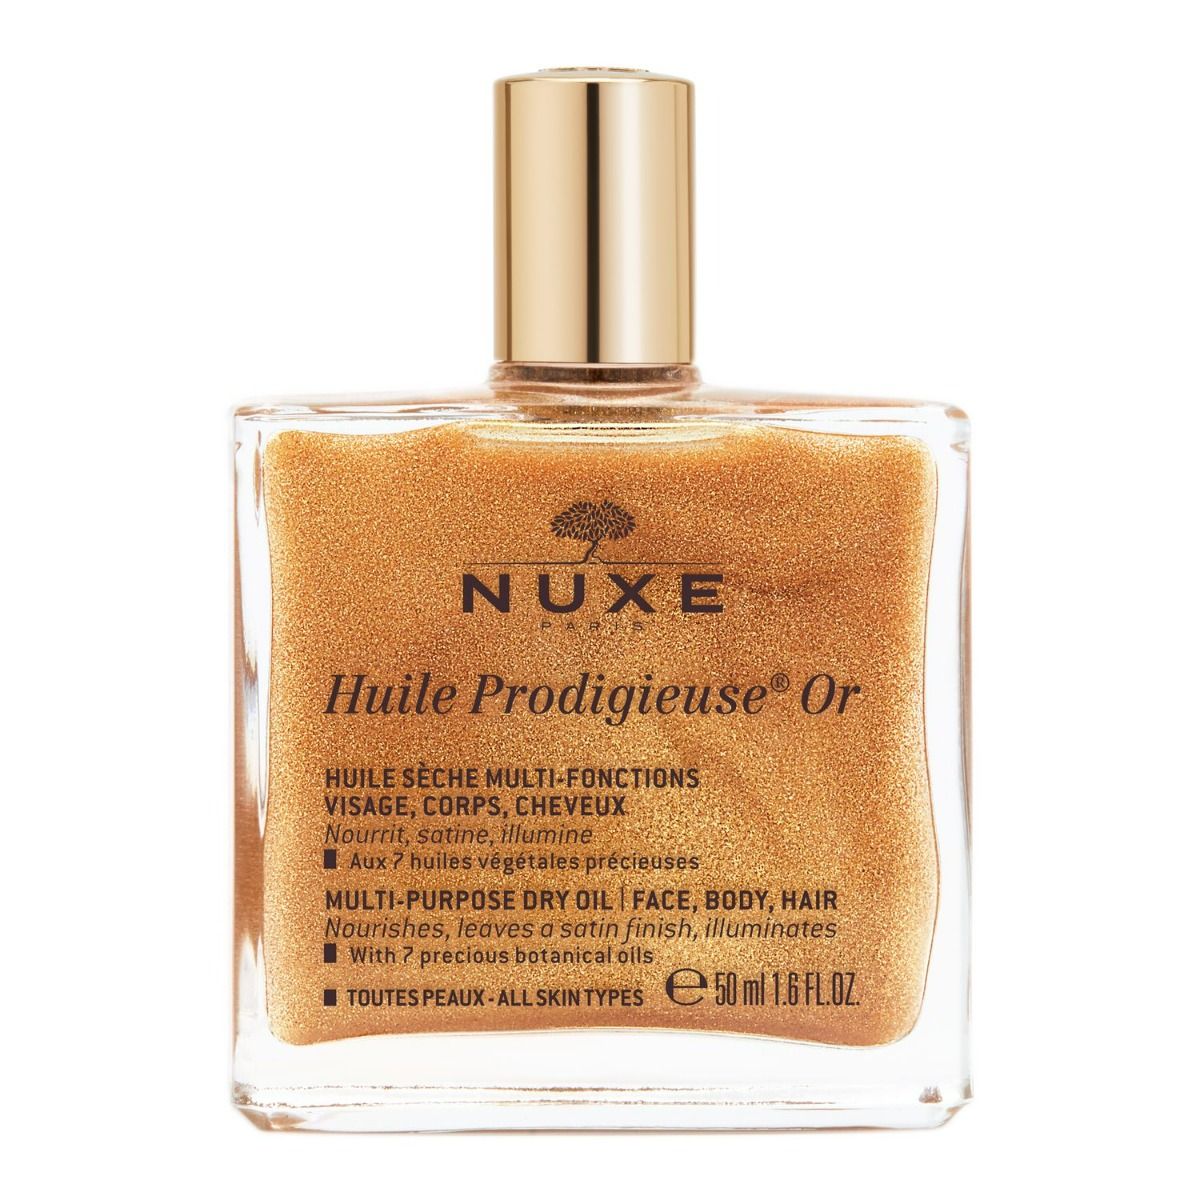 цена Nuxe Huile Prodigieuse Or масло для лица, тела и волос, 50 ml